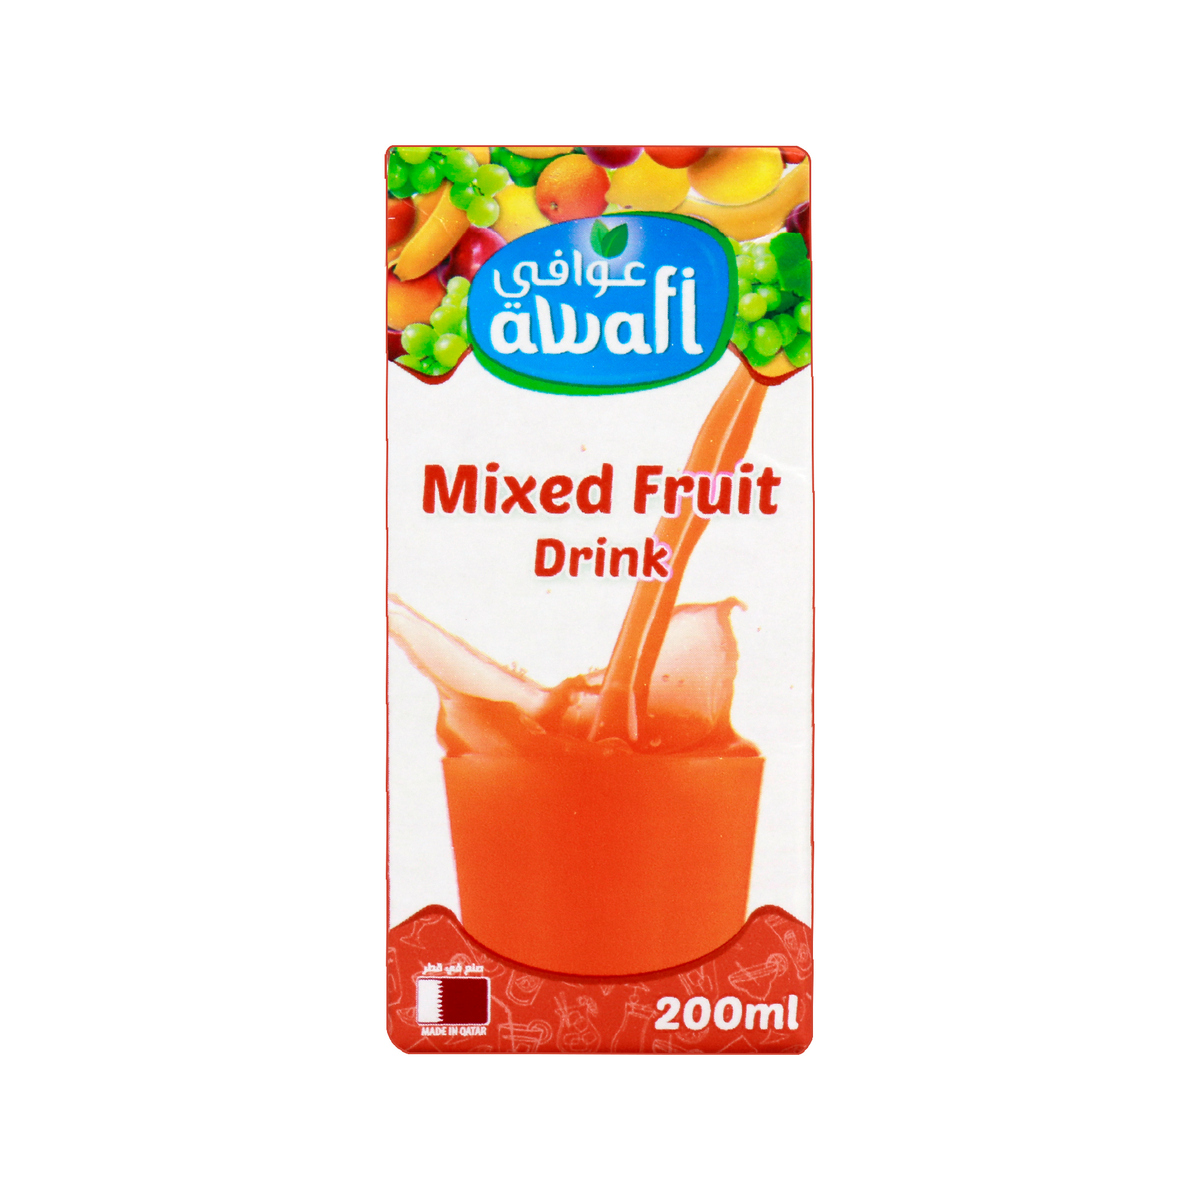 Awafi Mixed Fruit Drink 200ml